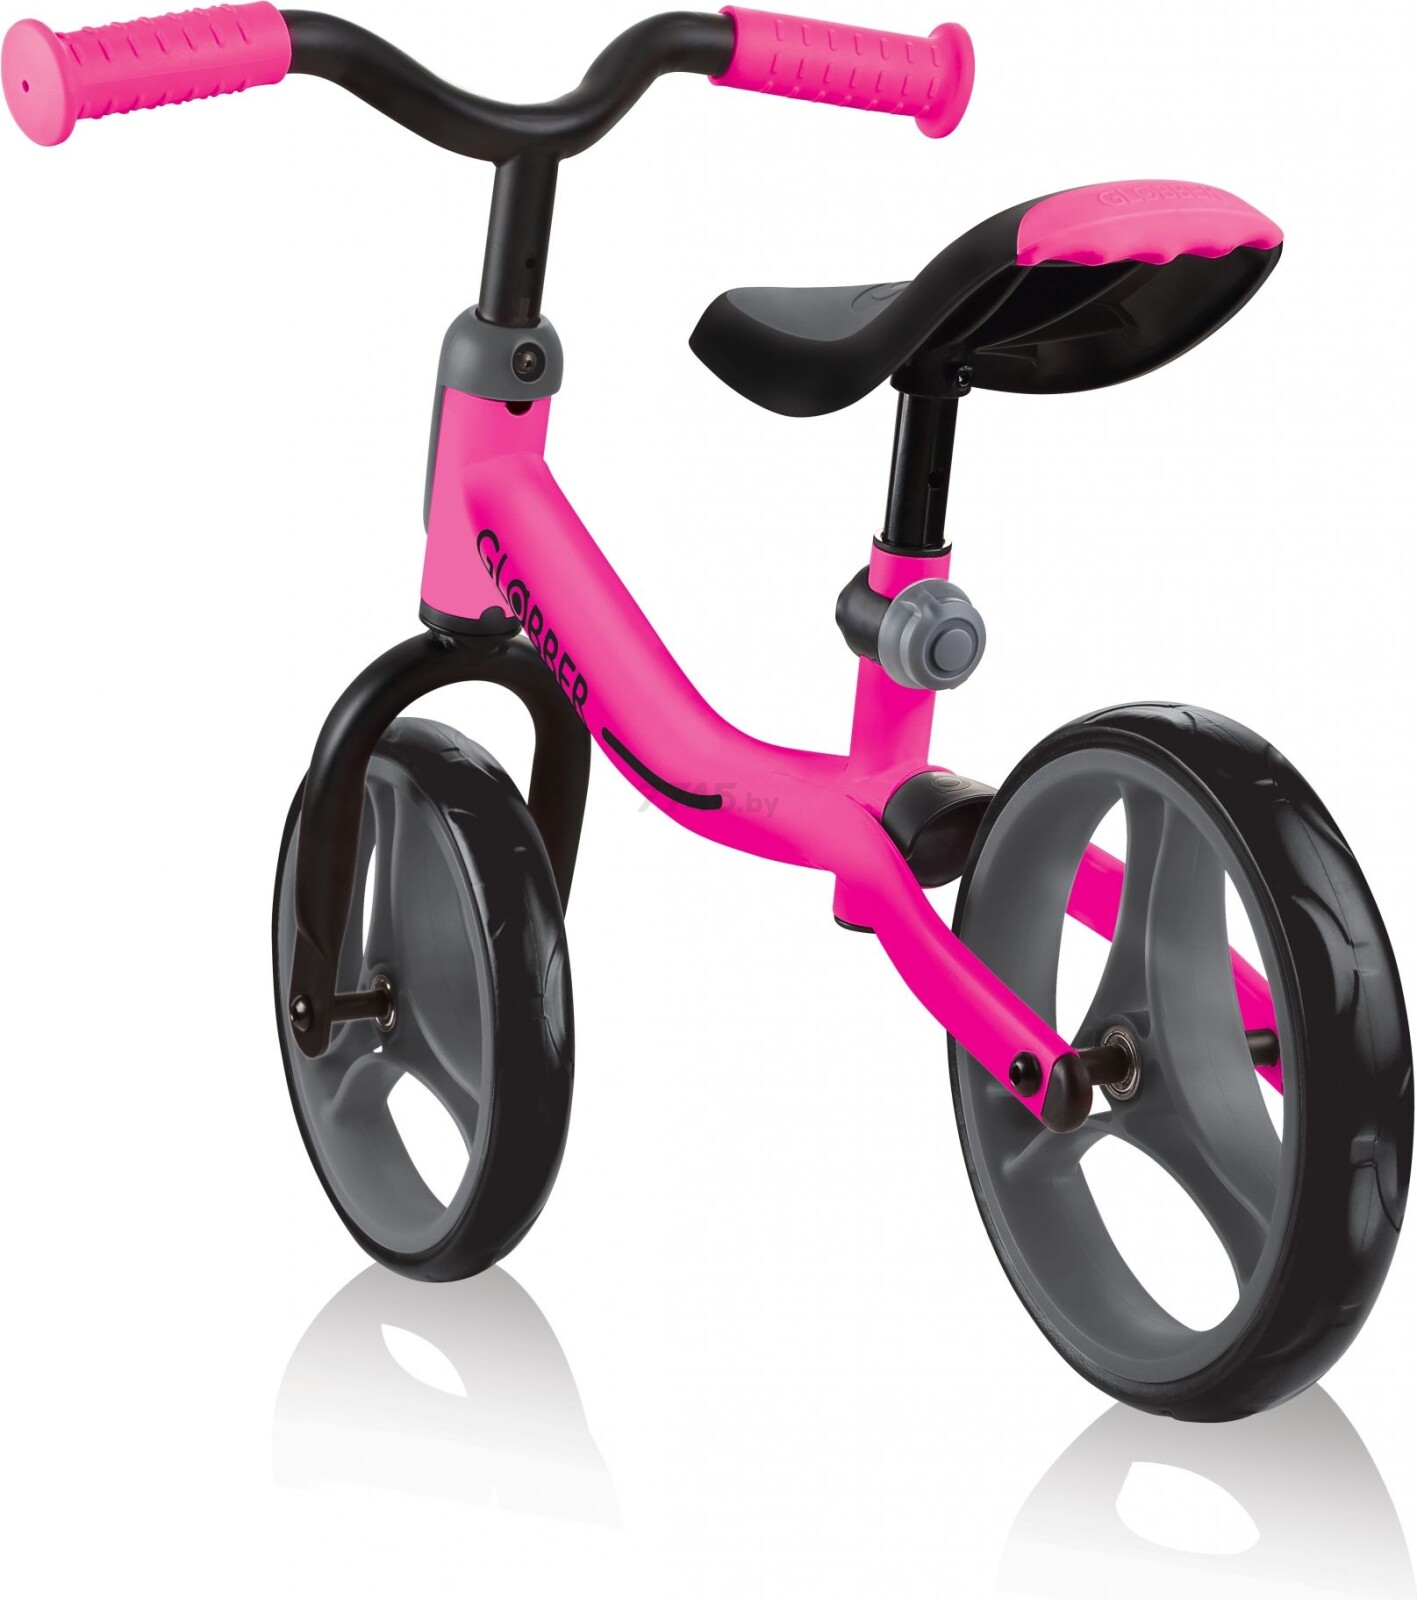 Беговел GLOBBER Go Bike розовый (610-110) - Фото 2